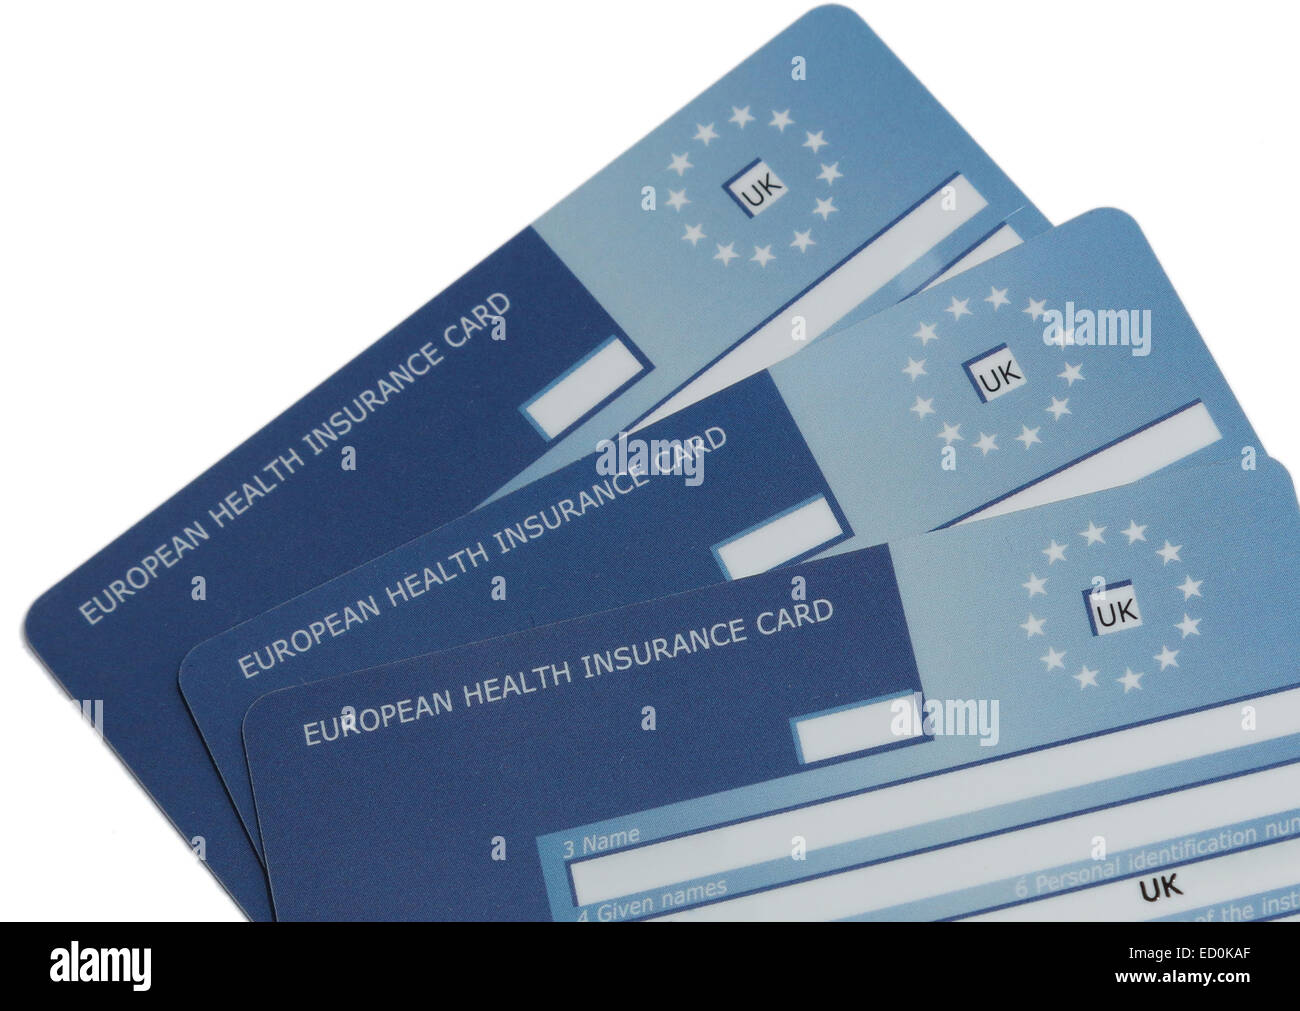 Les cartes d'assurance maladie européenne e111 - Remplacement - isolated on white Banque D'Images